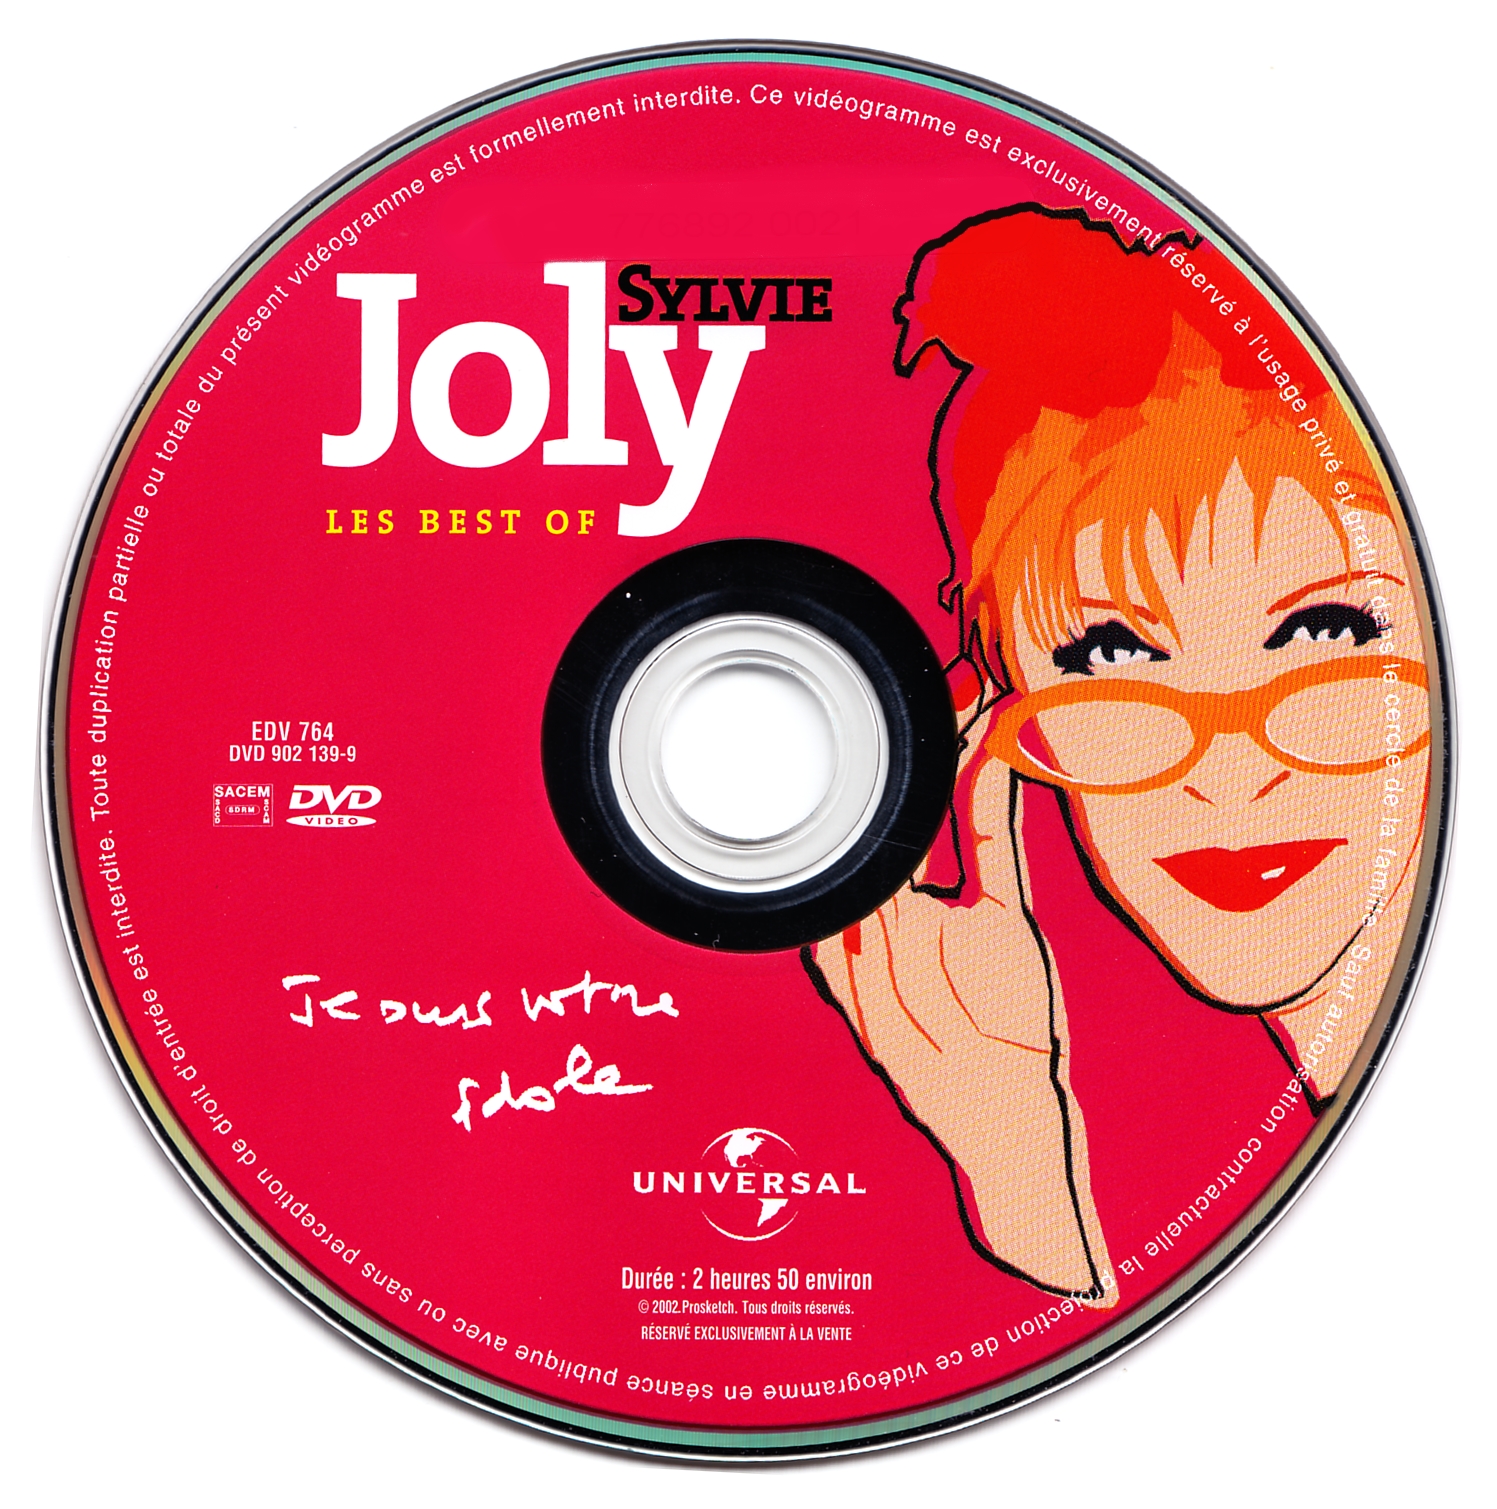 Sylvie Joly - Les best of